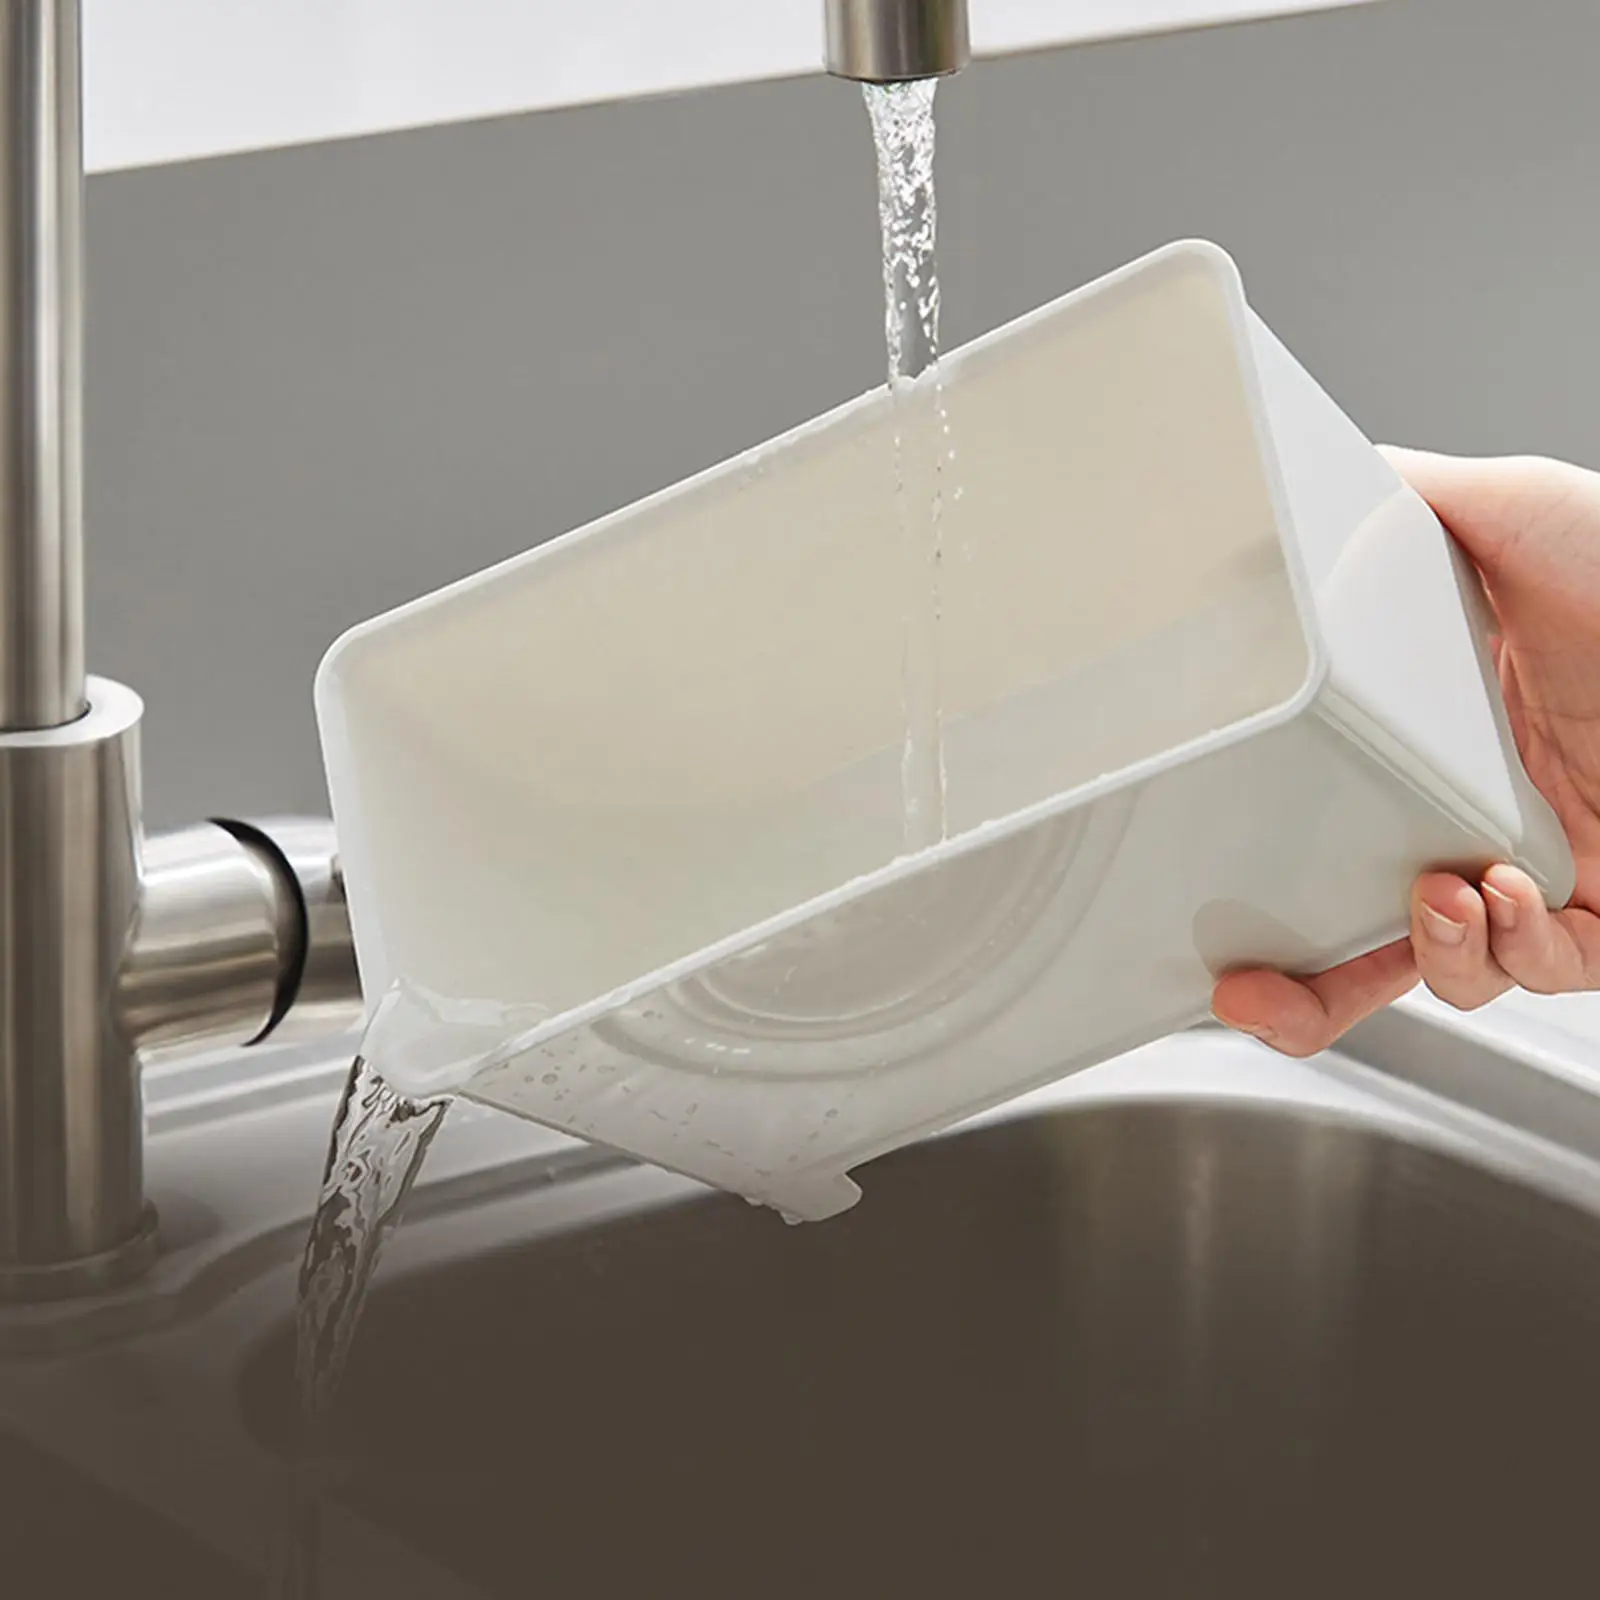 Household Drainable Trash Can Small Rubbish Bin Food Waste Bin for Bathroom